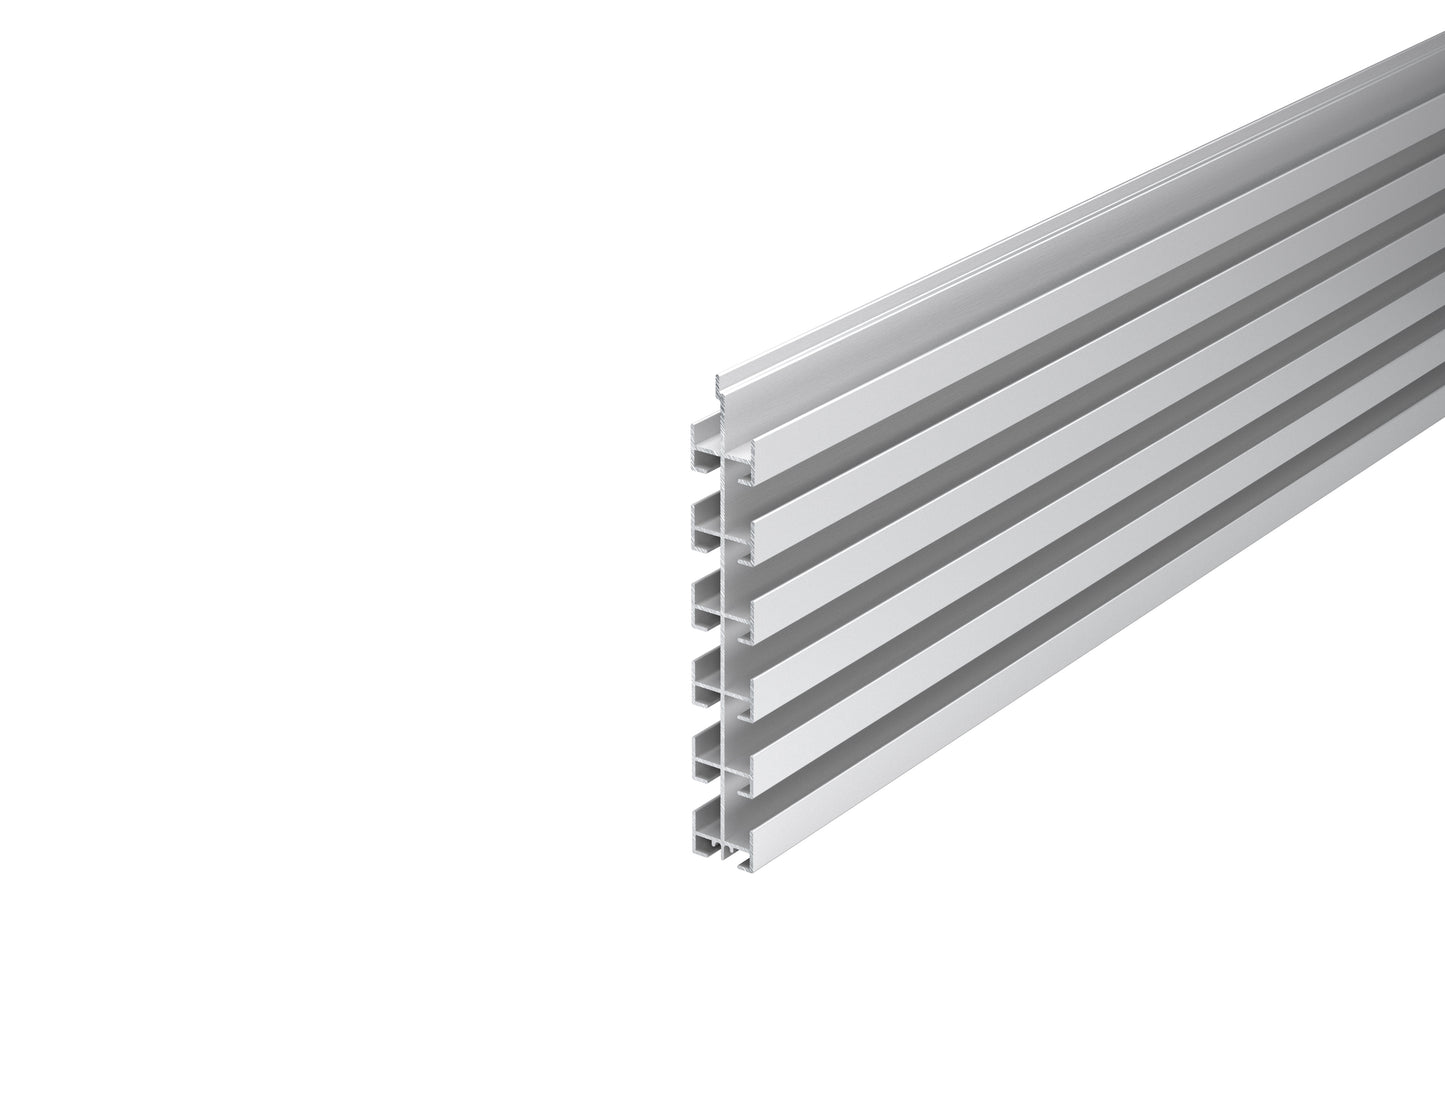 1" On-center double sided aluminum slatwall extrusion 1" OC aluminum slatwall double sided